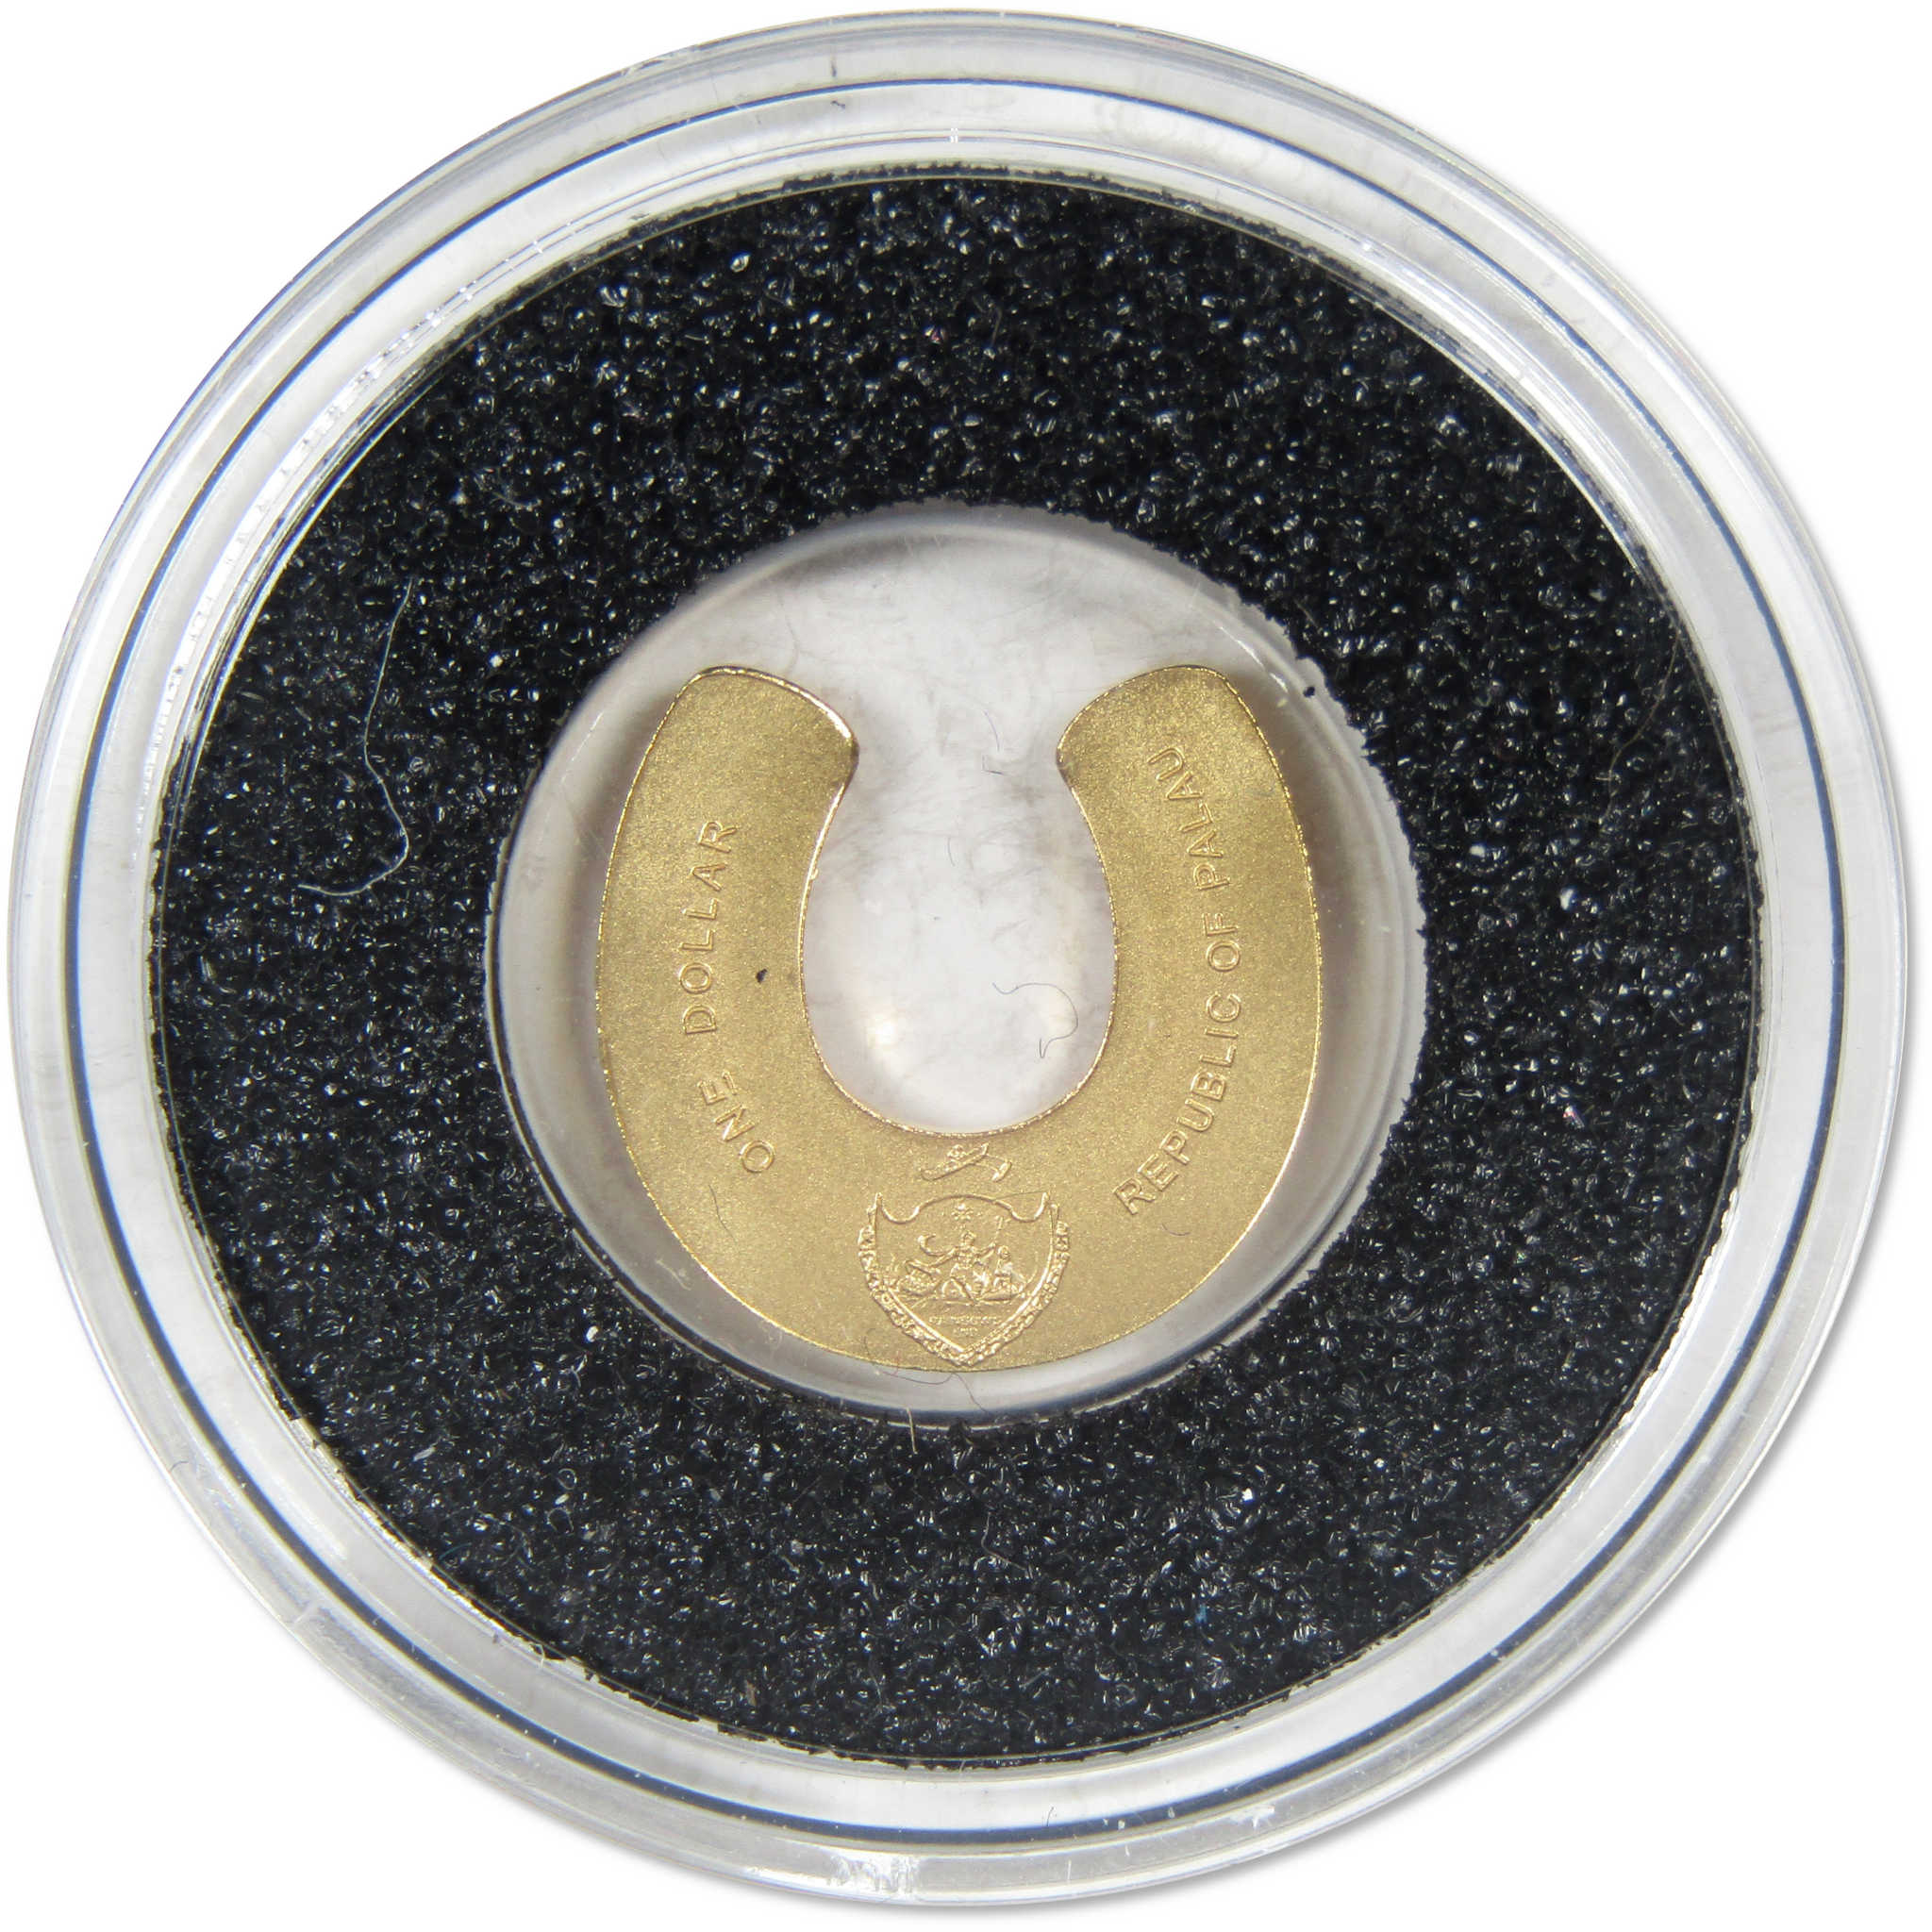 Special Shapes Golden Horseshoe BU 1/2 g .9999 Gold $1 Coin Palau COA